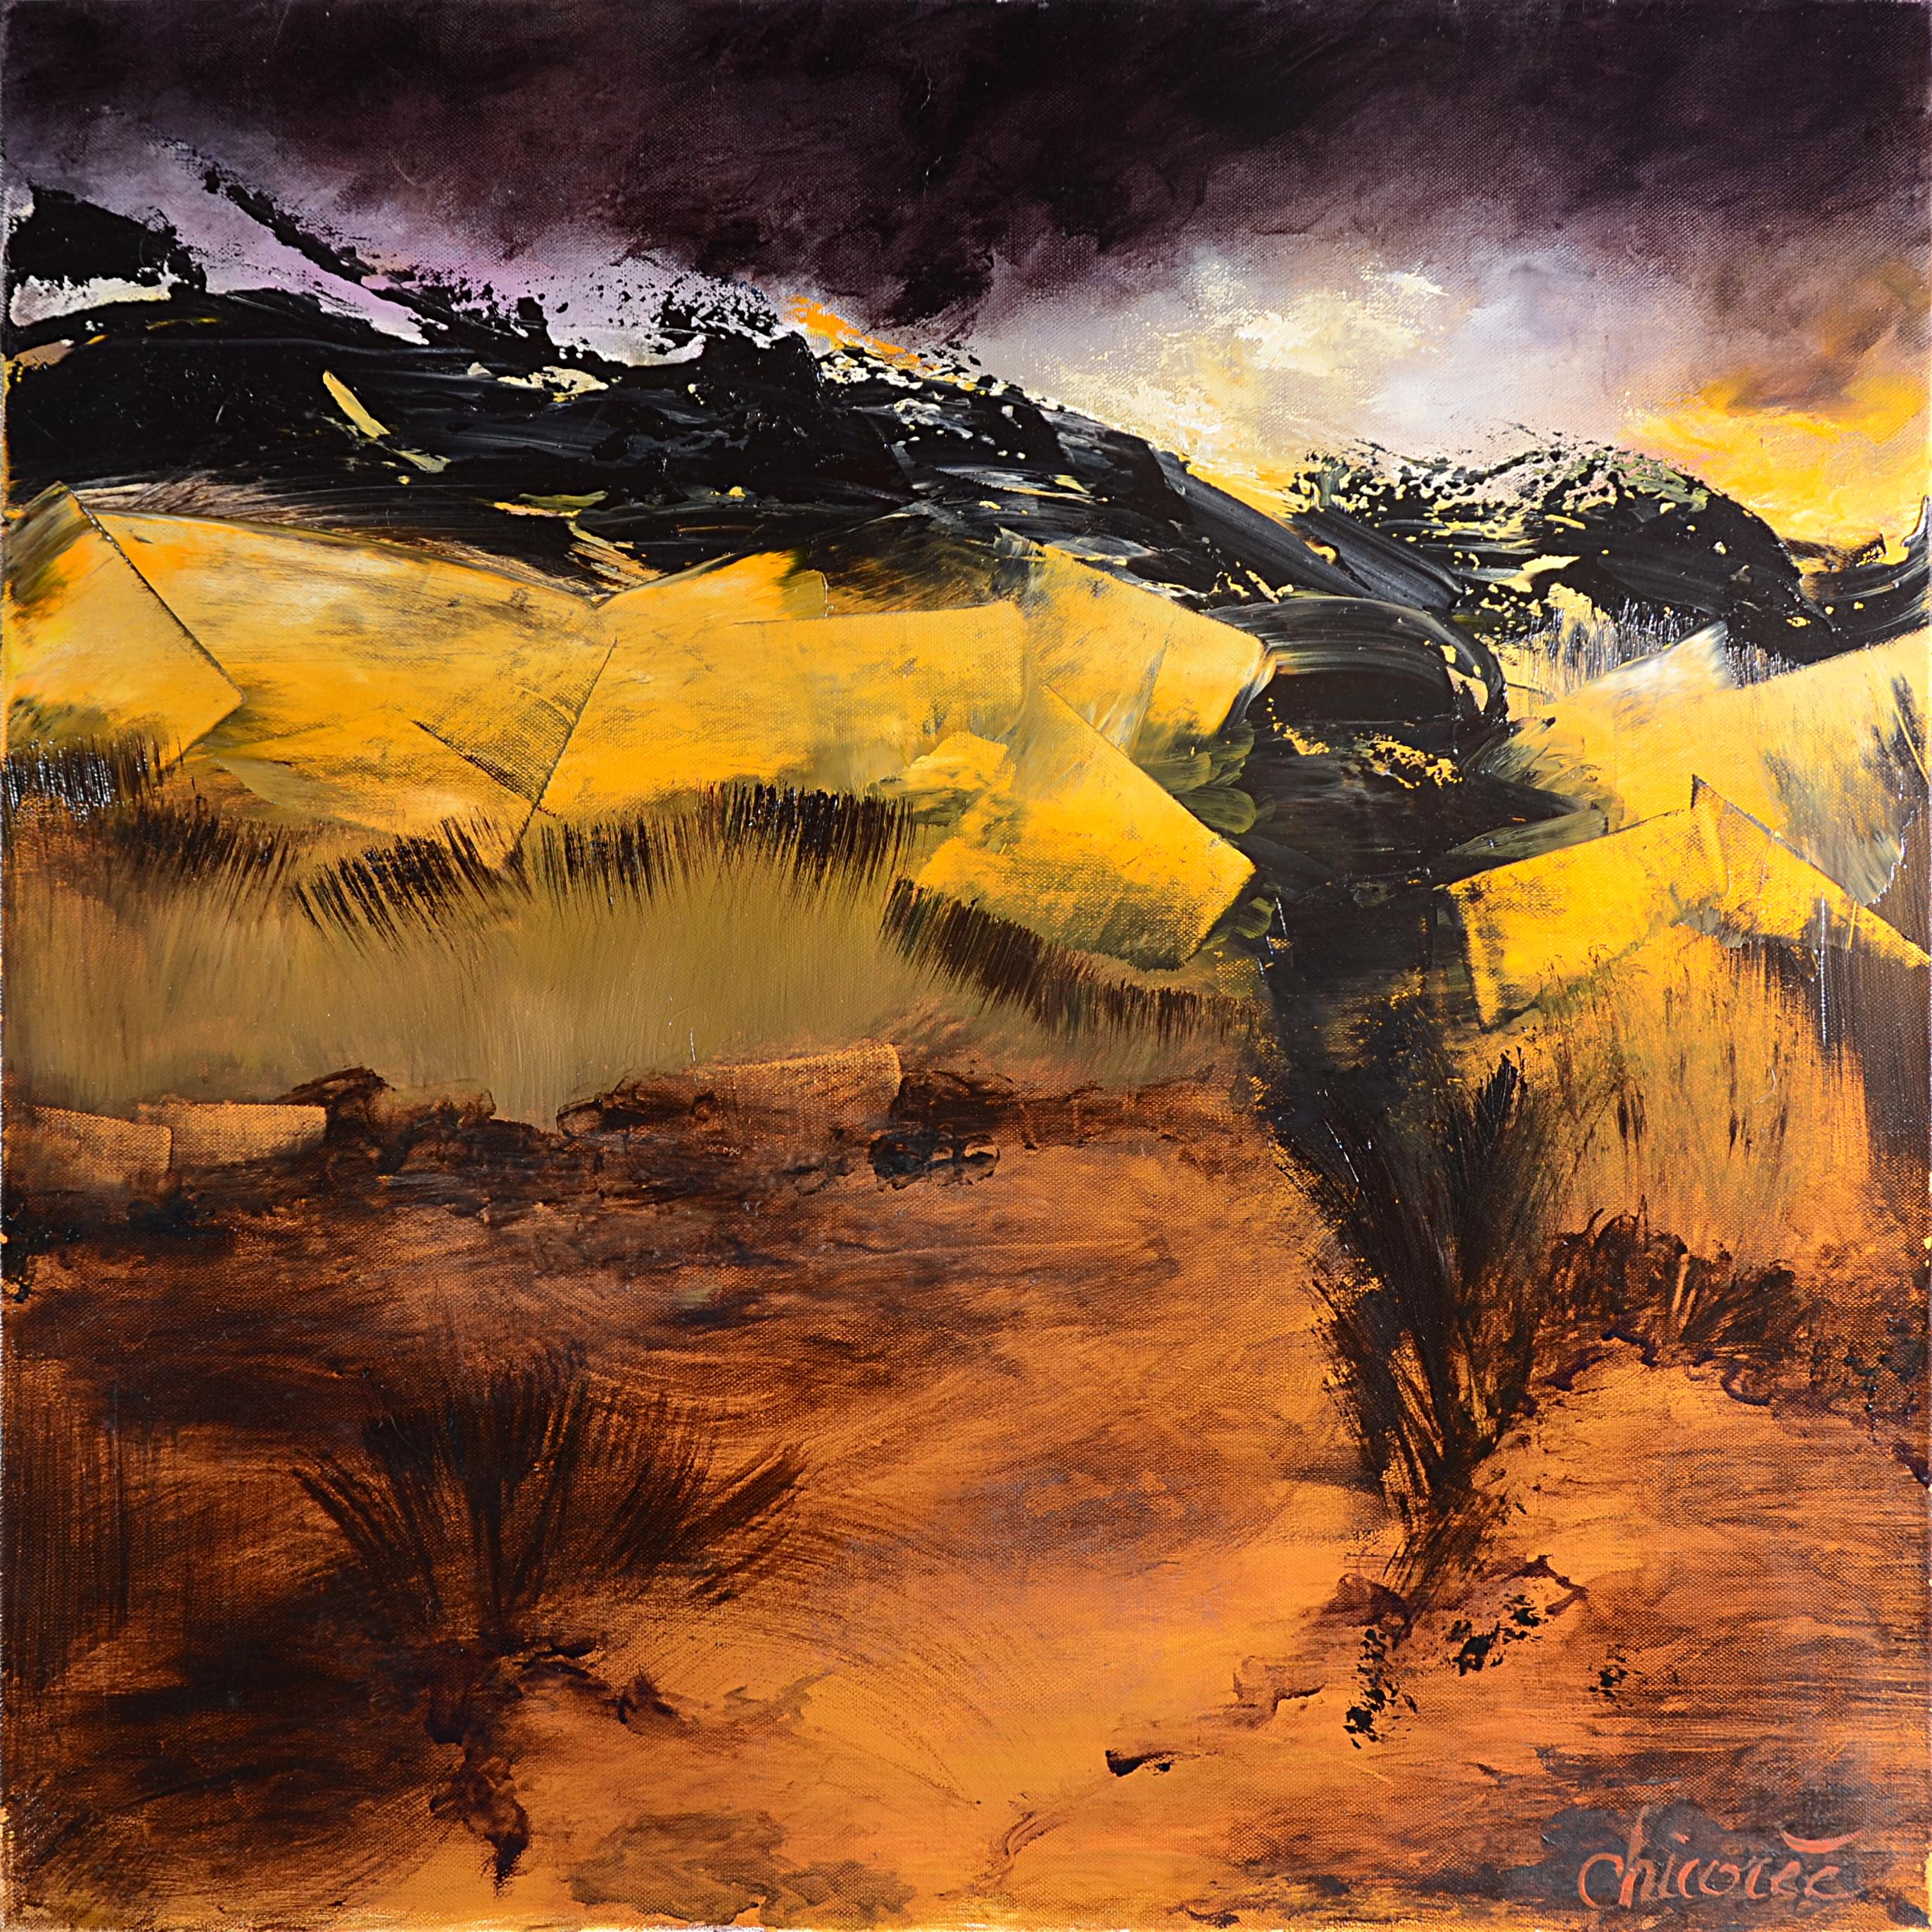 Chicorée Landscape Painting - Shadow and Light #2 ("Ombre et Lumière"), Black and Orange-Brown Oil Painting